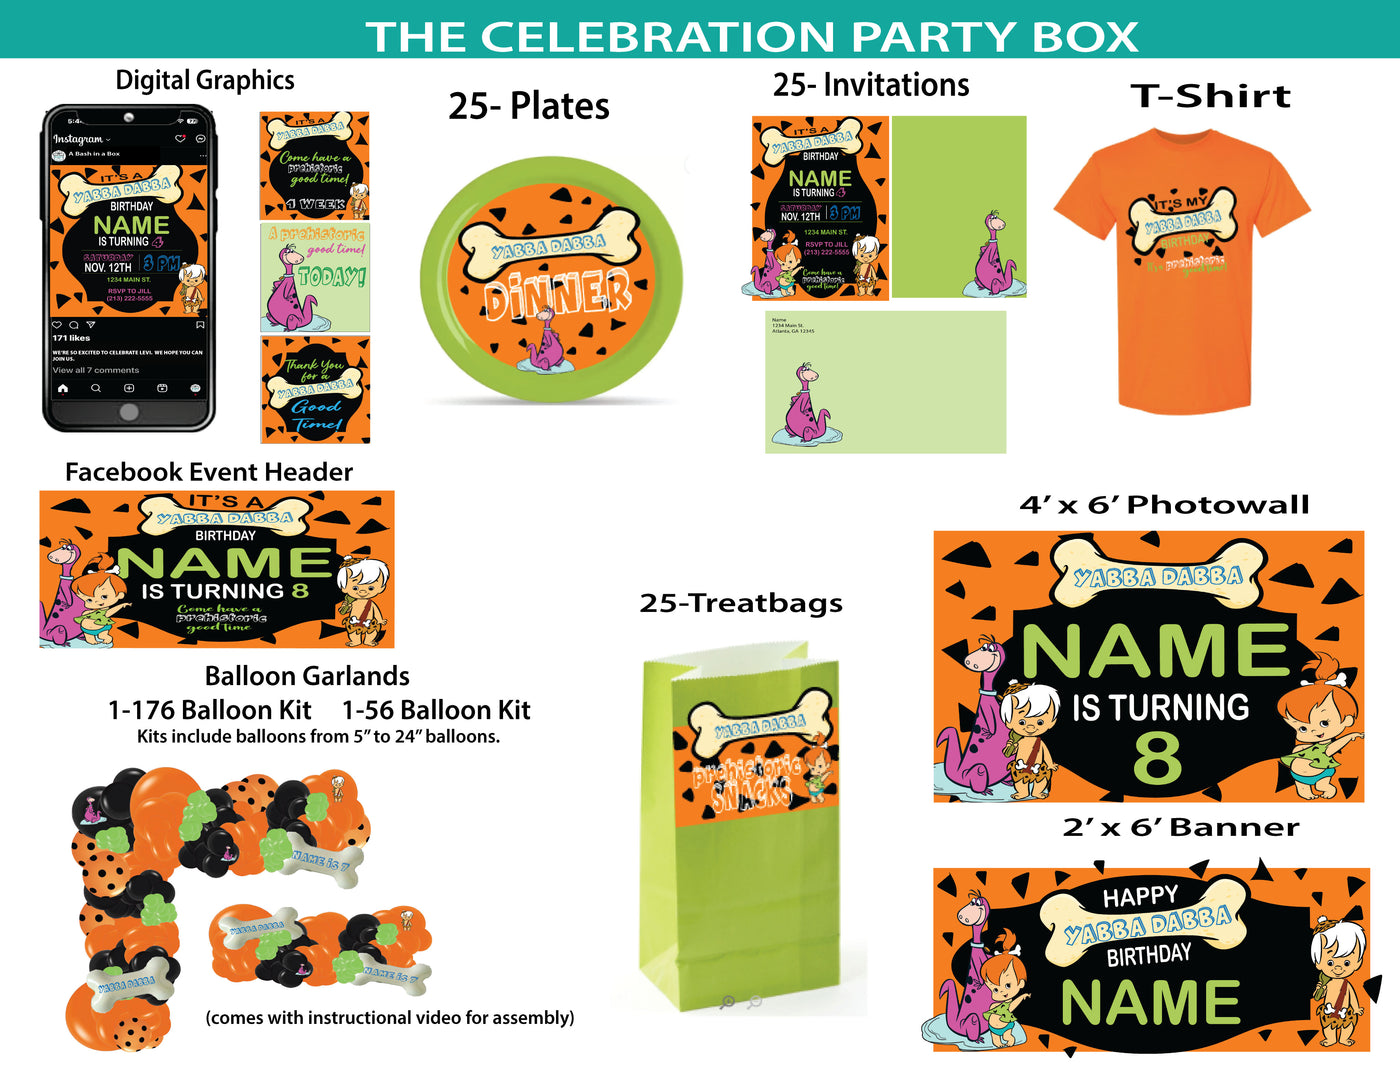 Yabba Dabba Birthday -Celebration Party Box